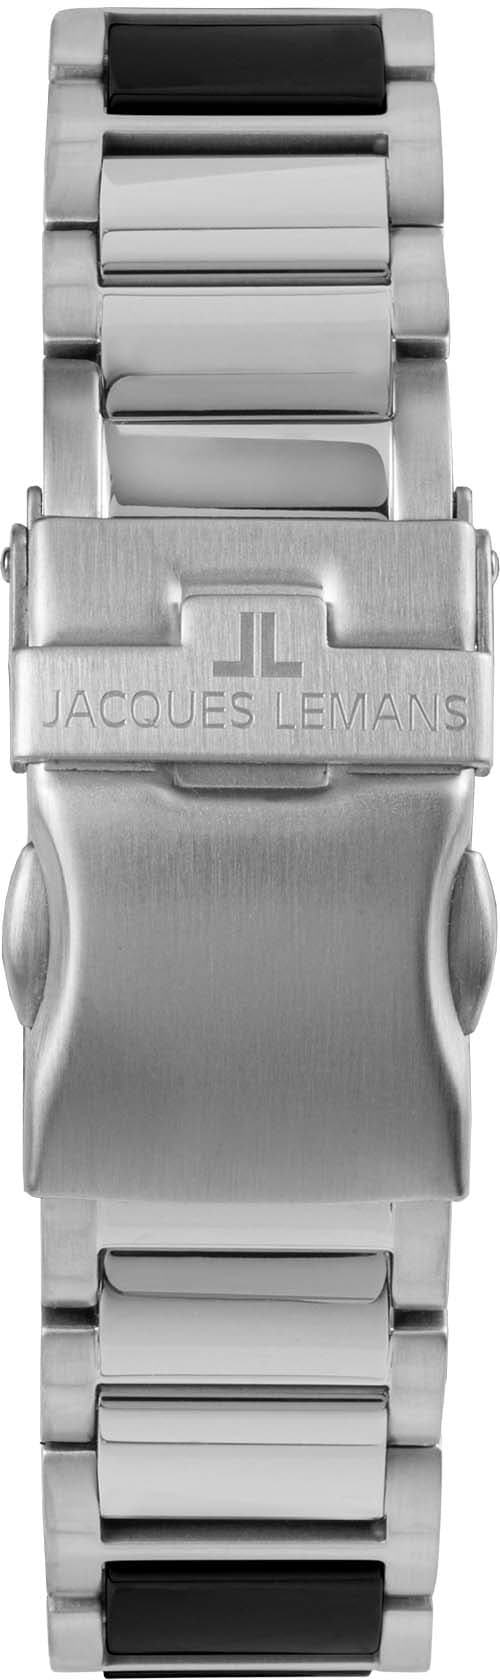 Jacques Lemans Keramikuhr »Liverpool, 42-10A«, Quarzuhr, Armbanduhr, Herrenuhr, Datum, Leuchtzeiger